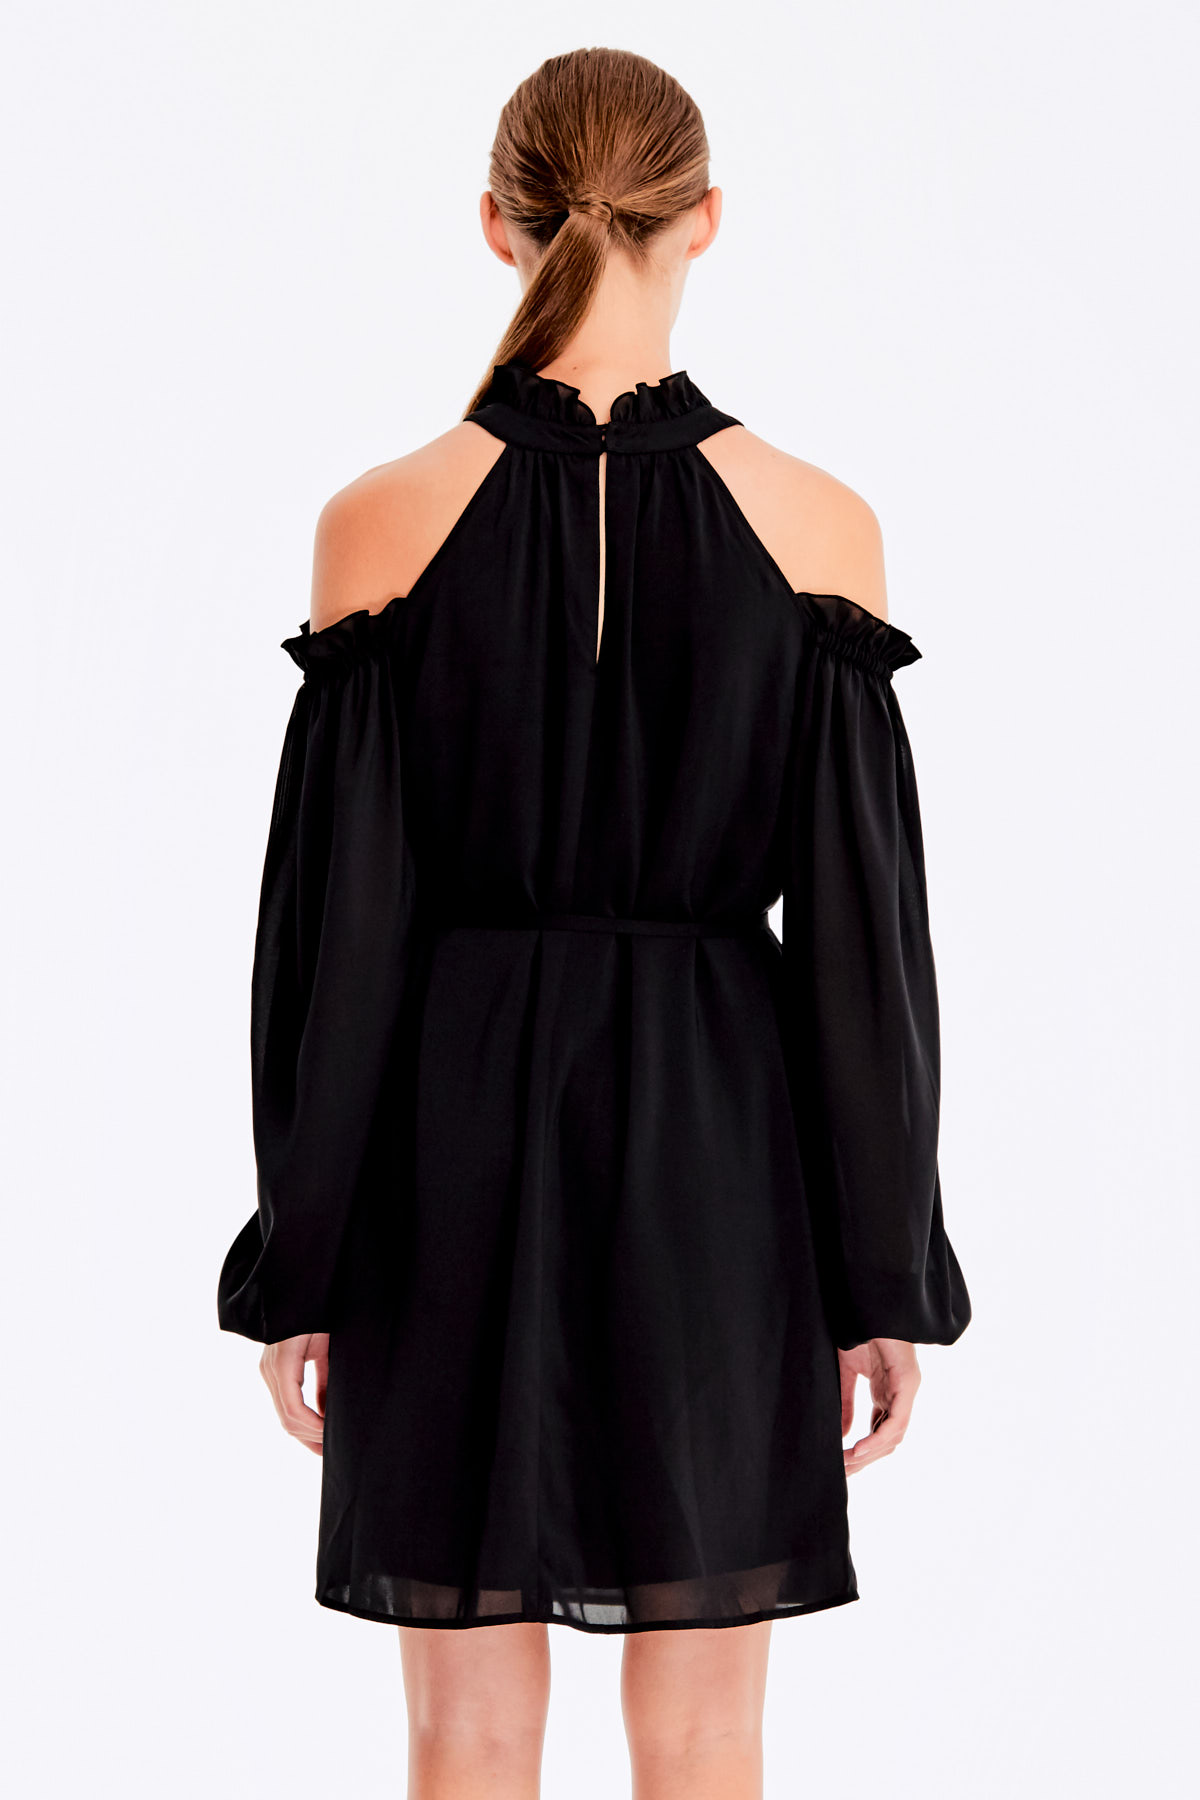 Open shoulder black chiffon dress, photo 6